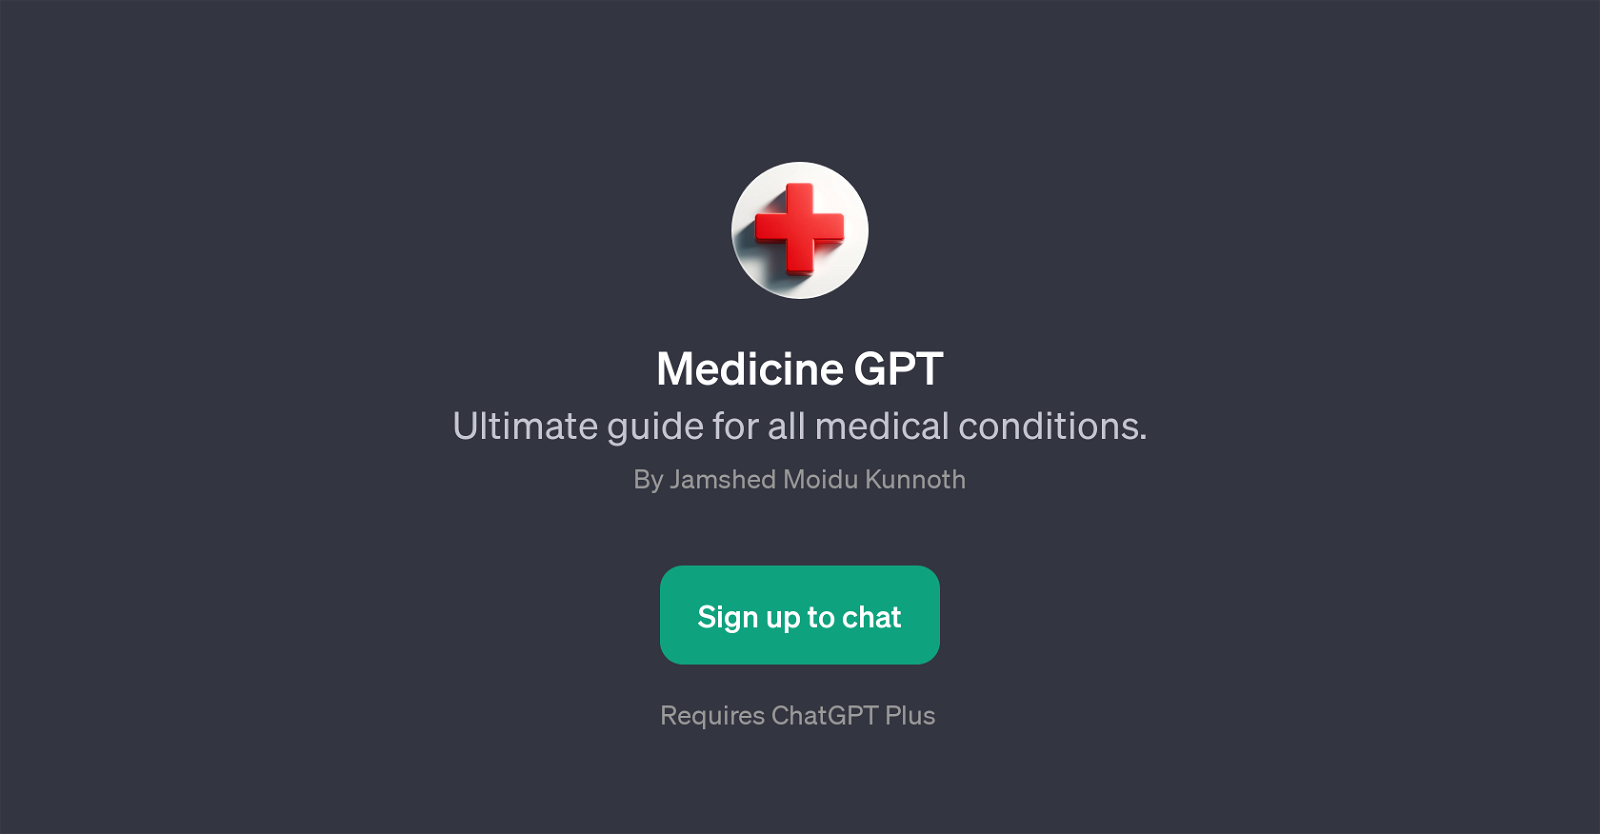 Medicine GPT website